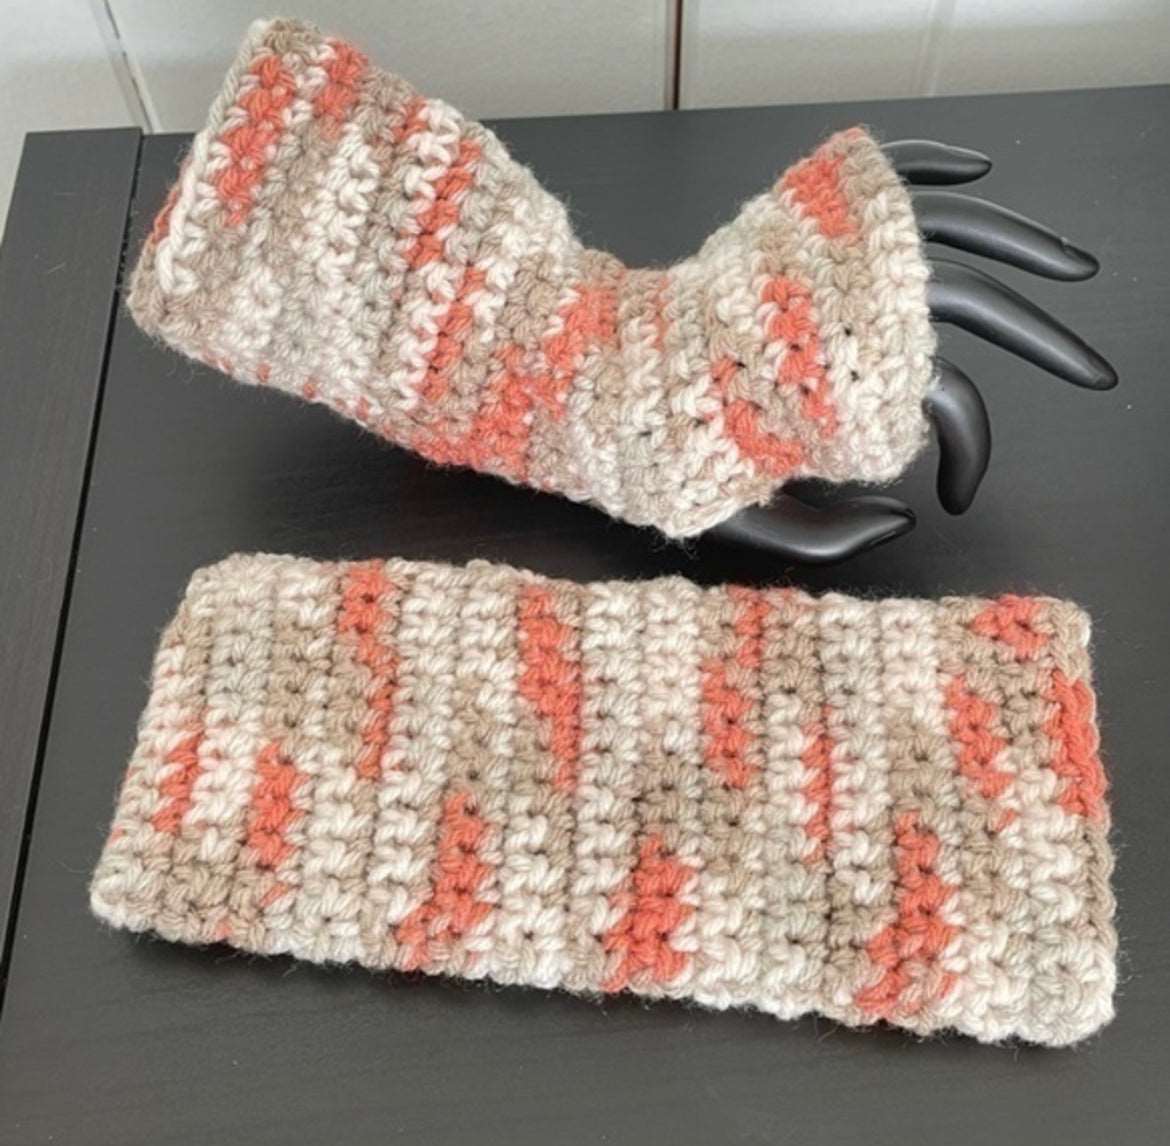 Gaming Texting Fingerless Gloves Marbled Orangesicle Cream Tan Gray Rust Salmon Crochet Knit Writing Tech Wrist Warmers